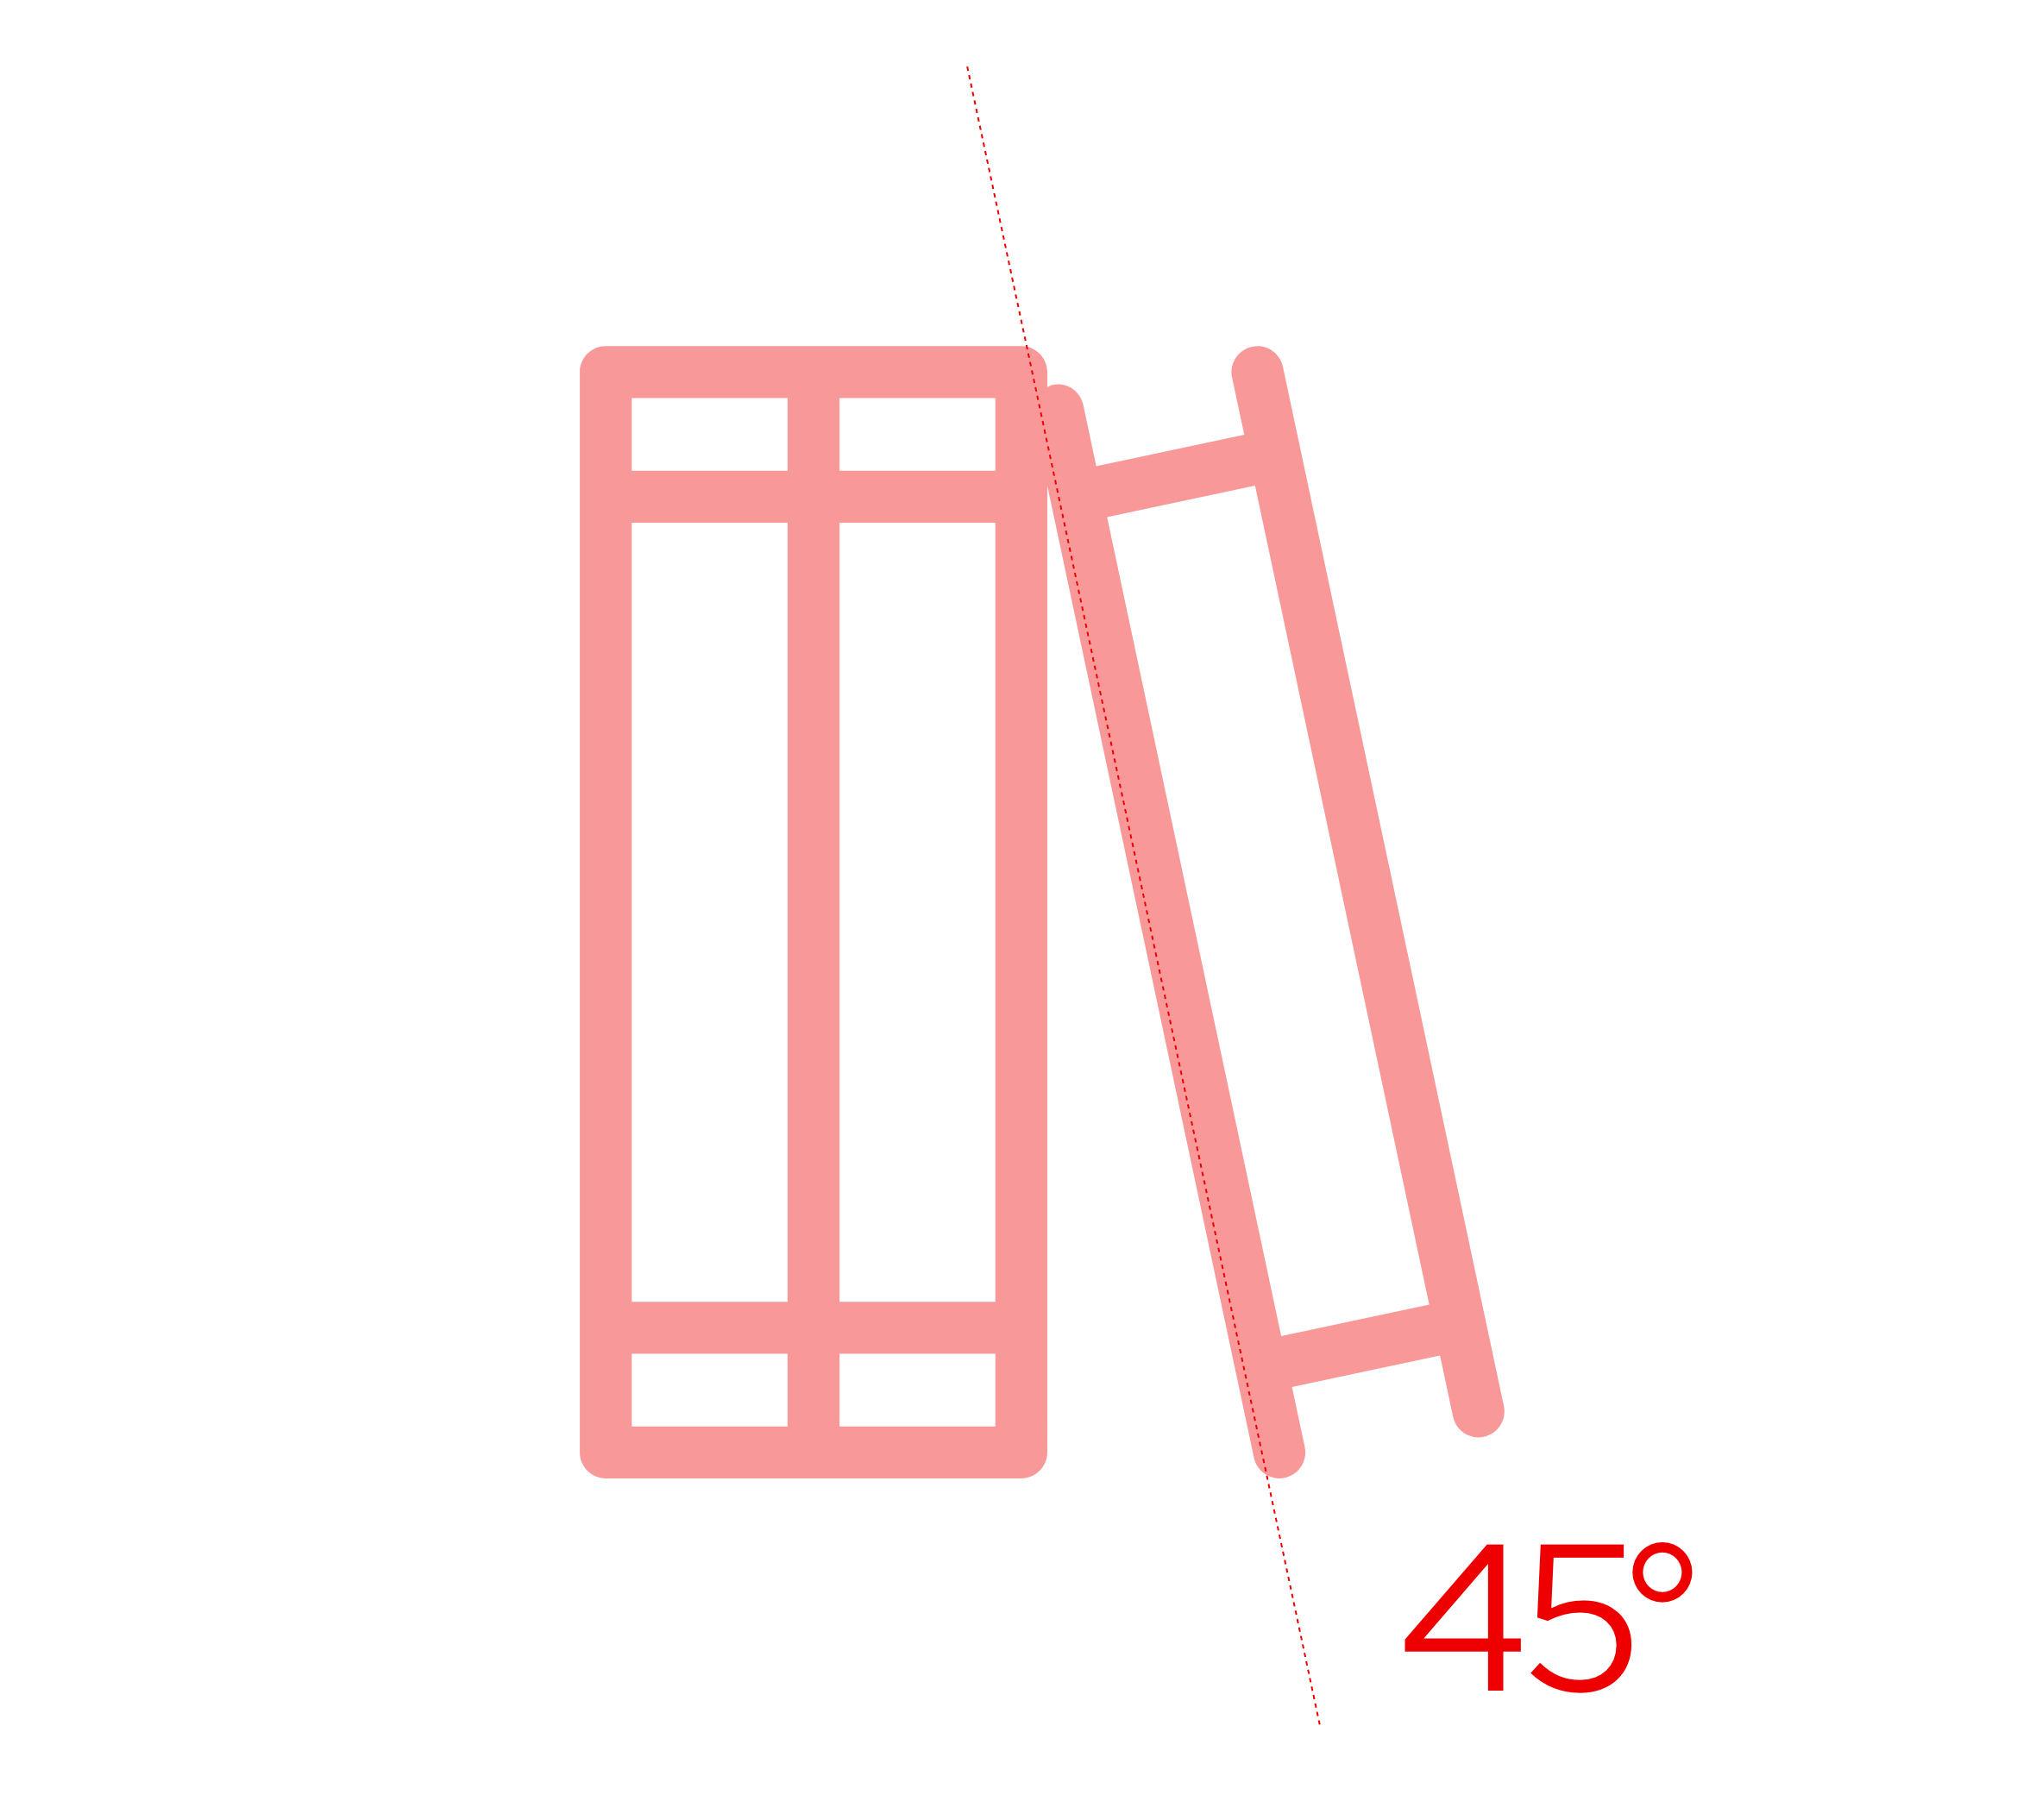 Illustration of 45 degree angle on books